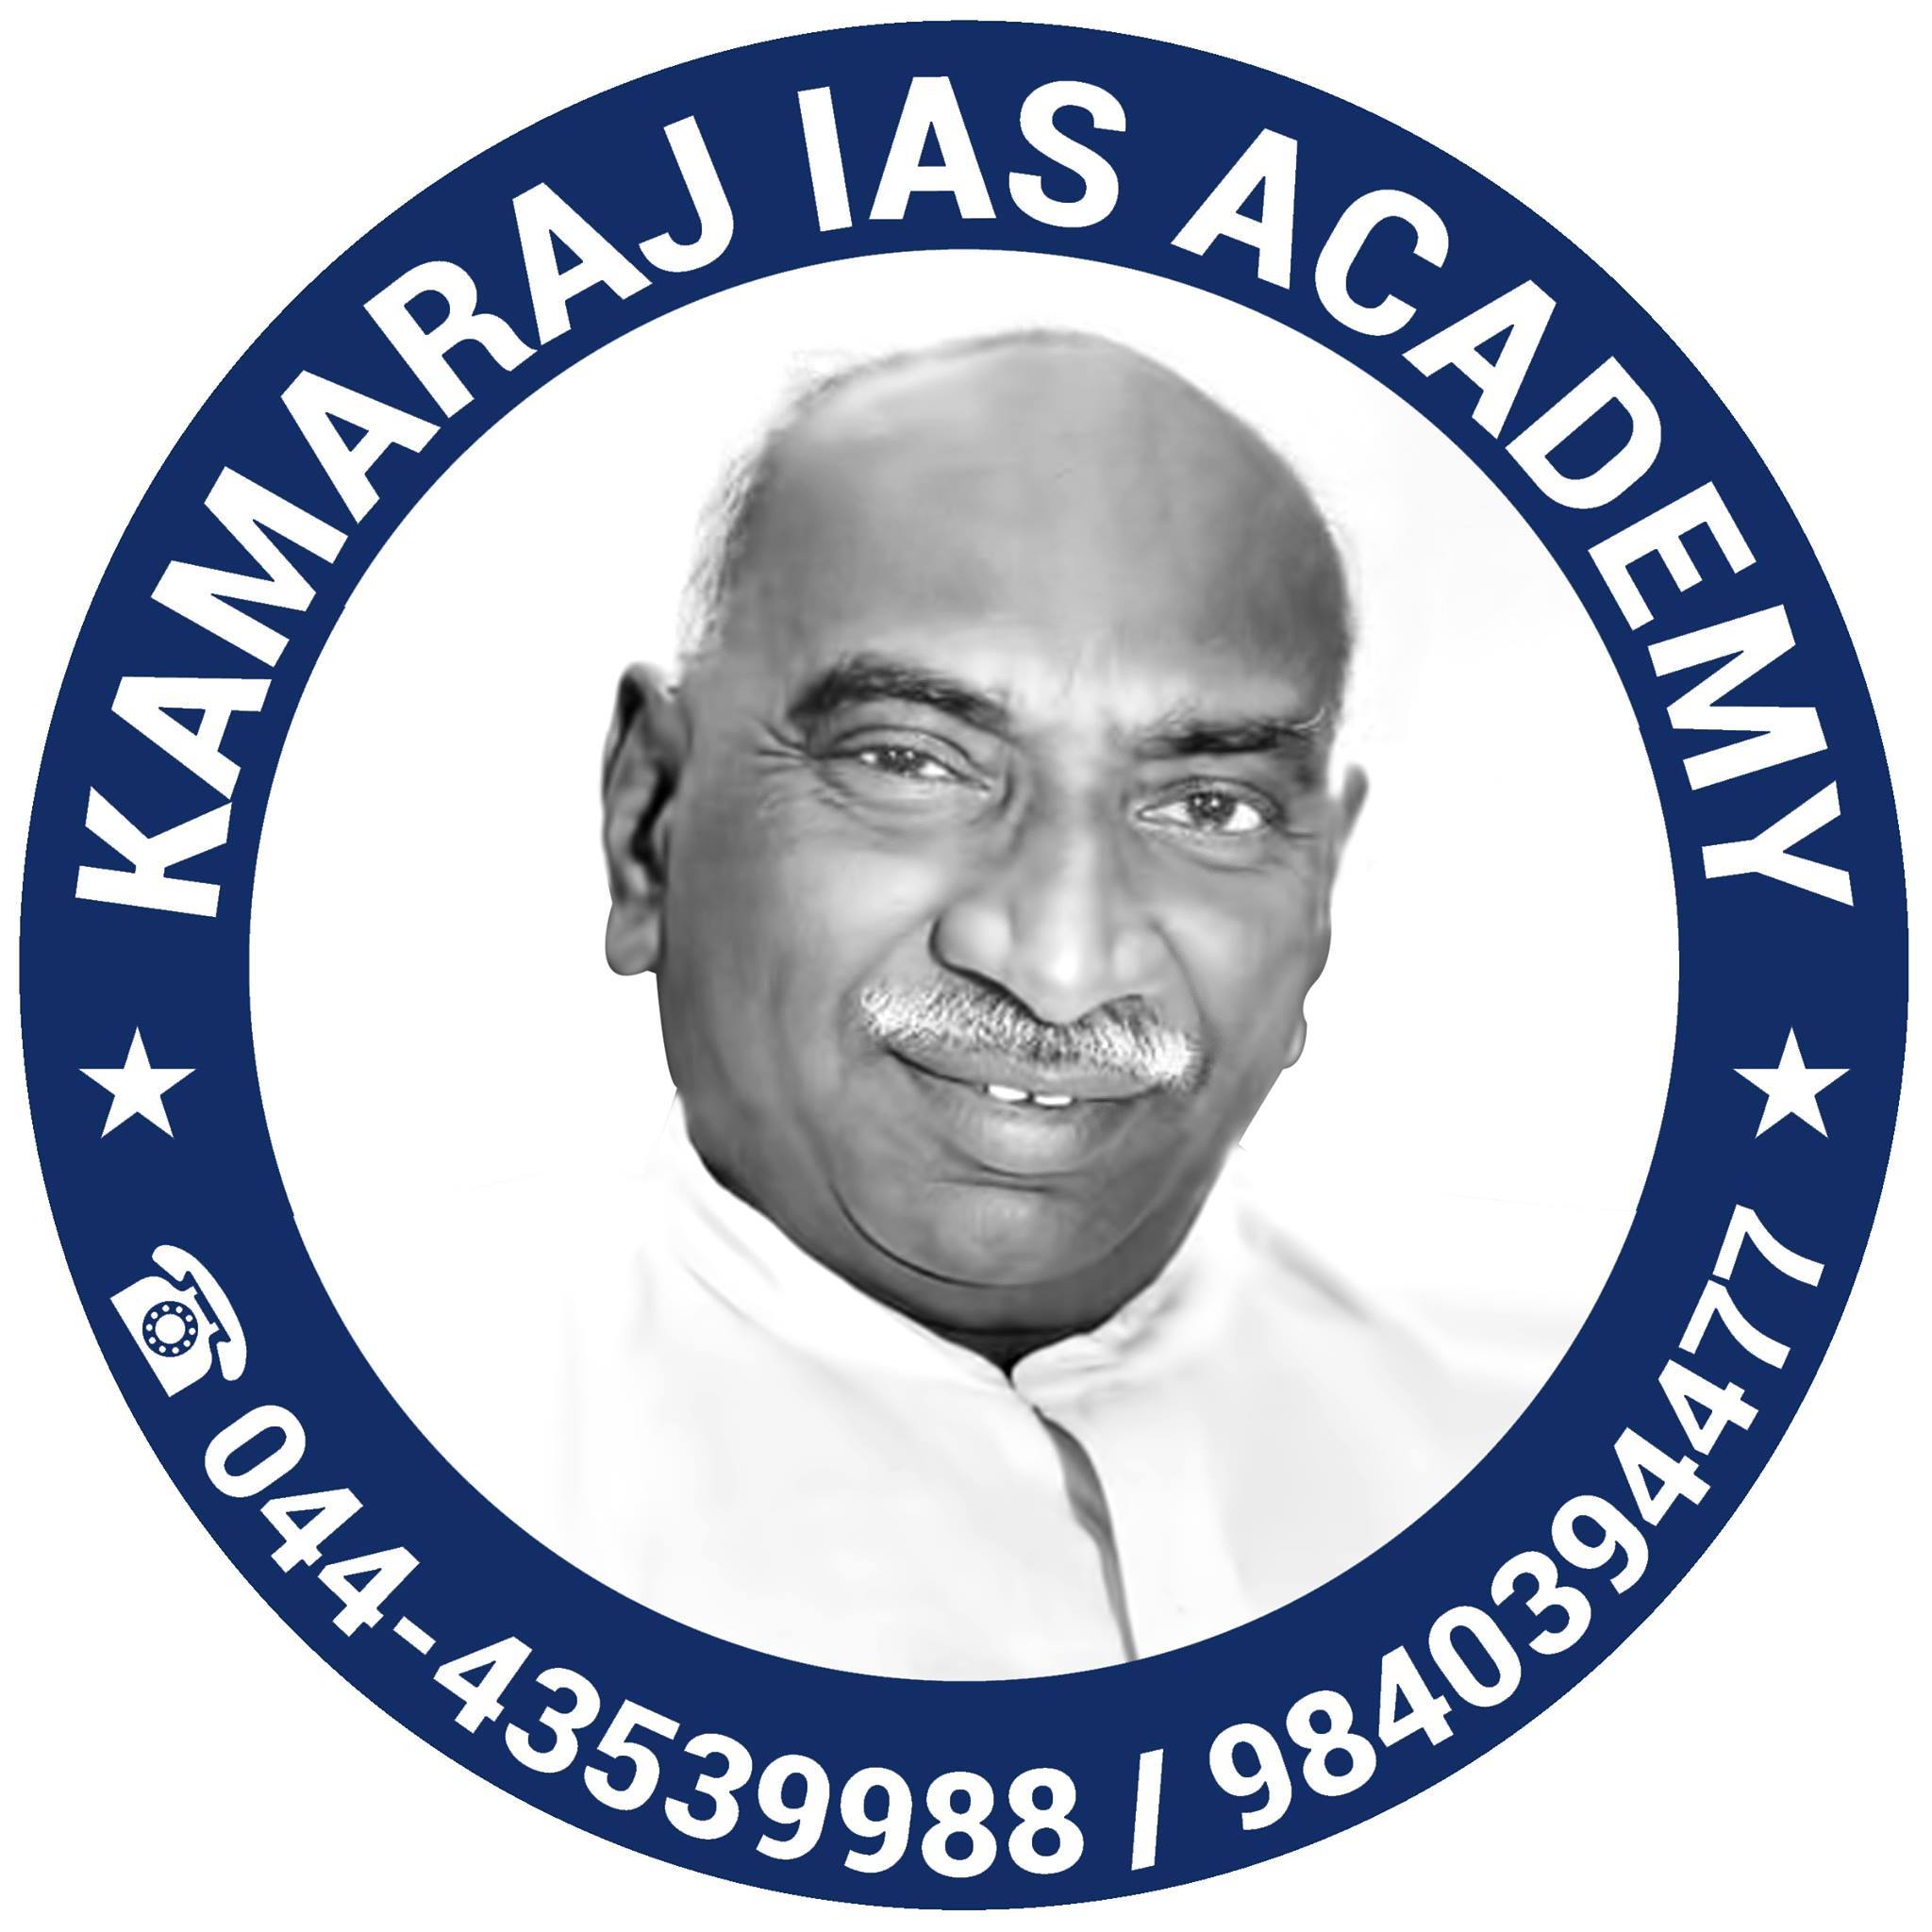 Kamaraj IAS Academy